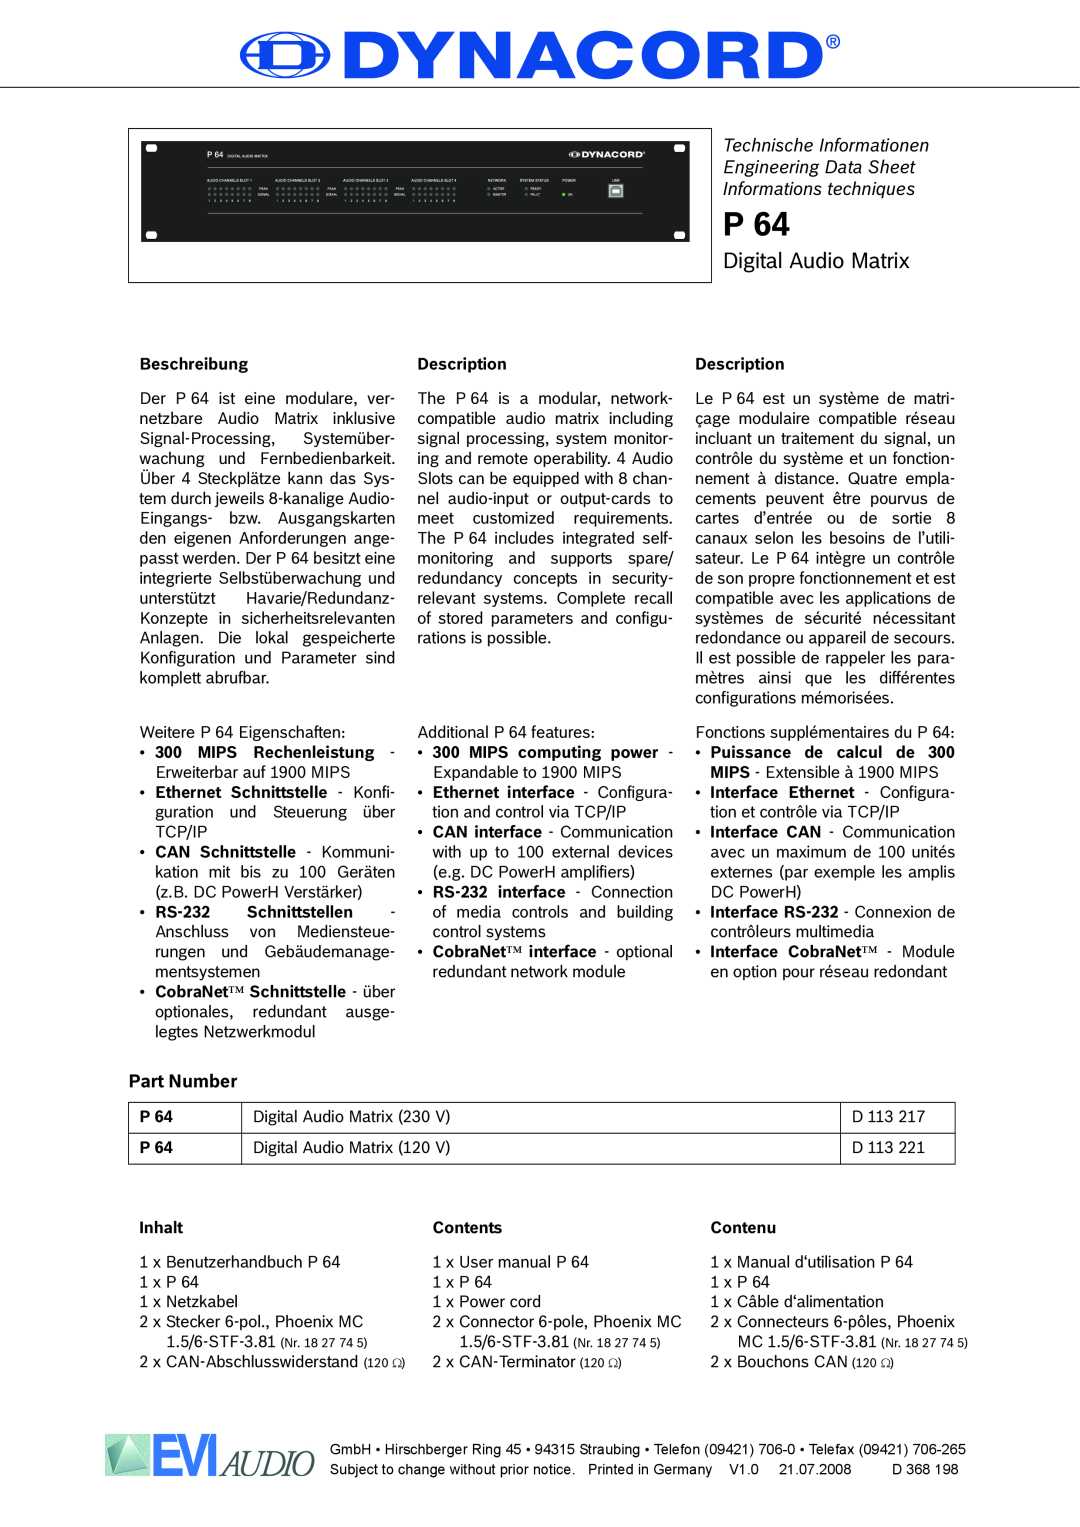 Dynacord P 64 user manual Part Number, Digital Audio Matrix, Technische Informationen Engineering Data Sheet 